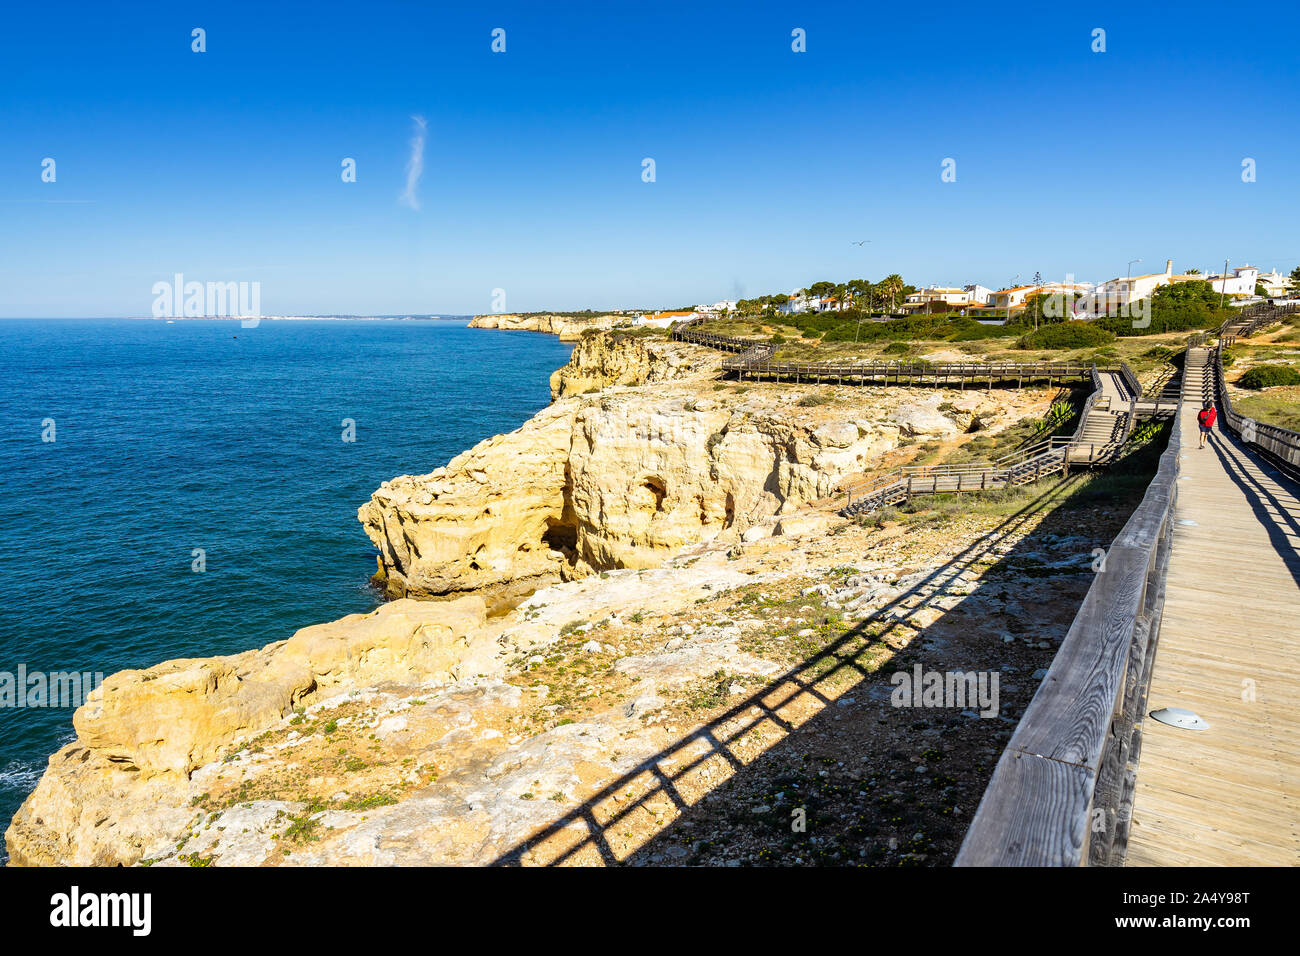 The scenic Carvoeiro boardwalk offers beautiful views of Algarve coastline and cliffs on Atlantic Ocean, Portugal Stock Photo